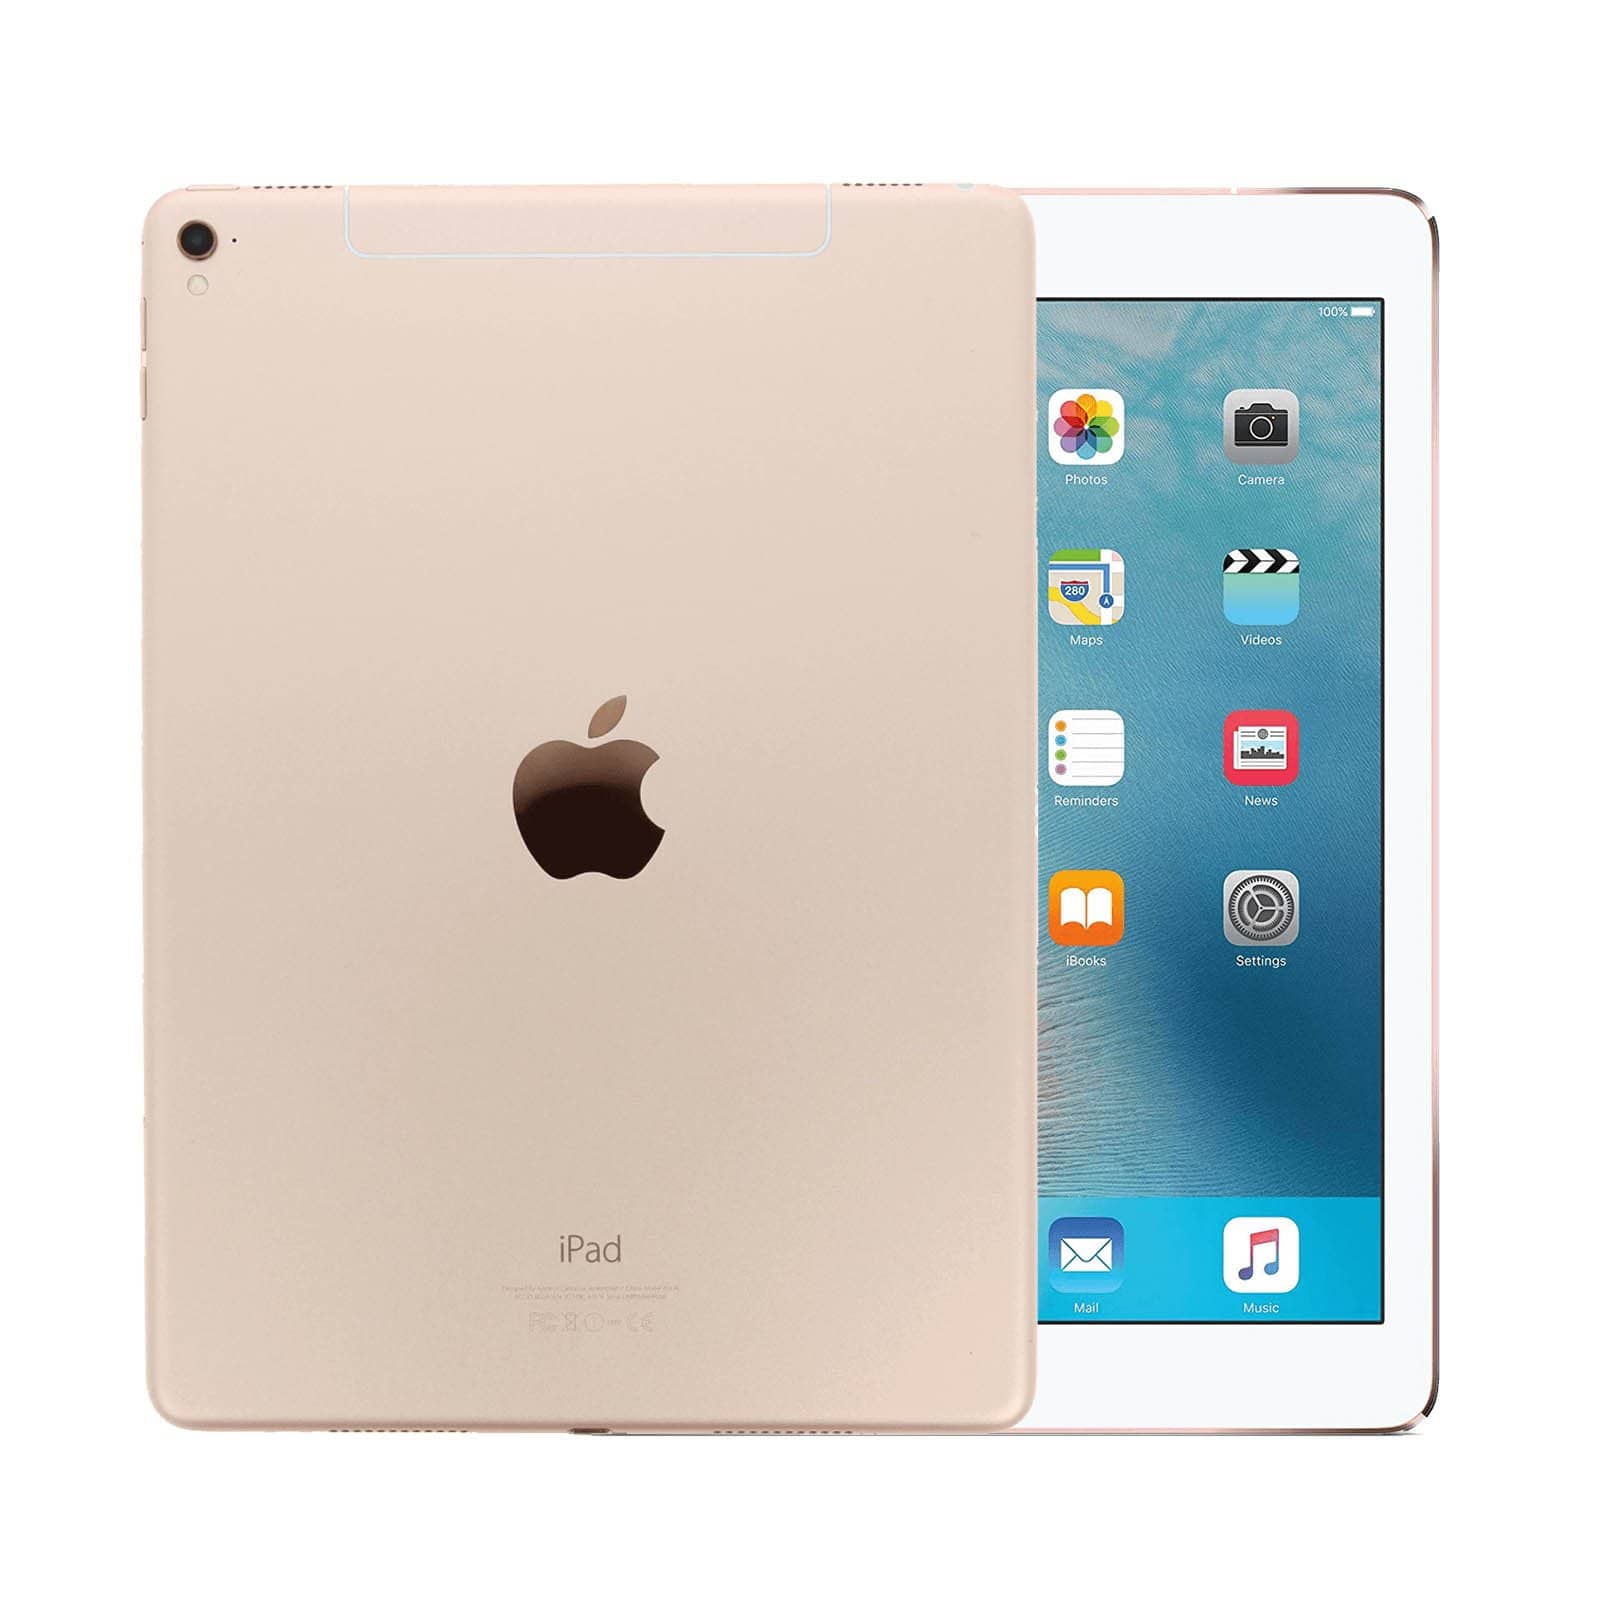 iPad Pro 9.7 Inch 32GB Gold Very Good - Unlocked 32GB Gold Very Good